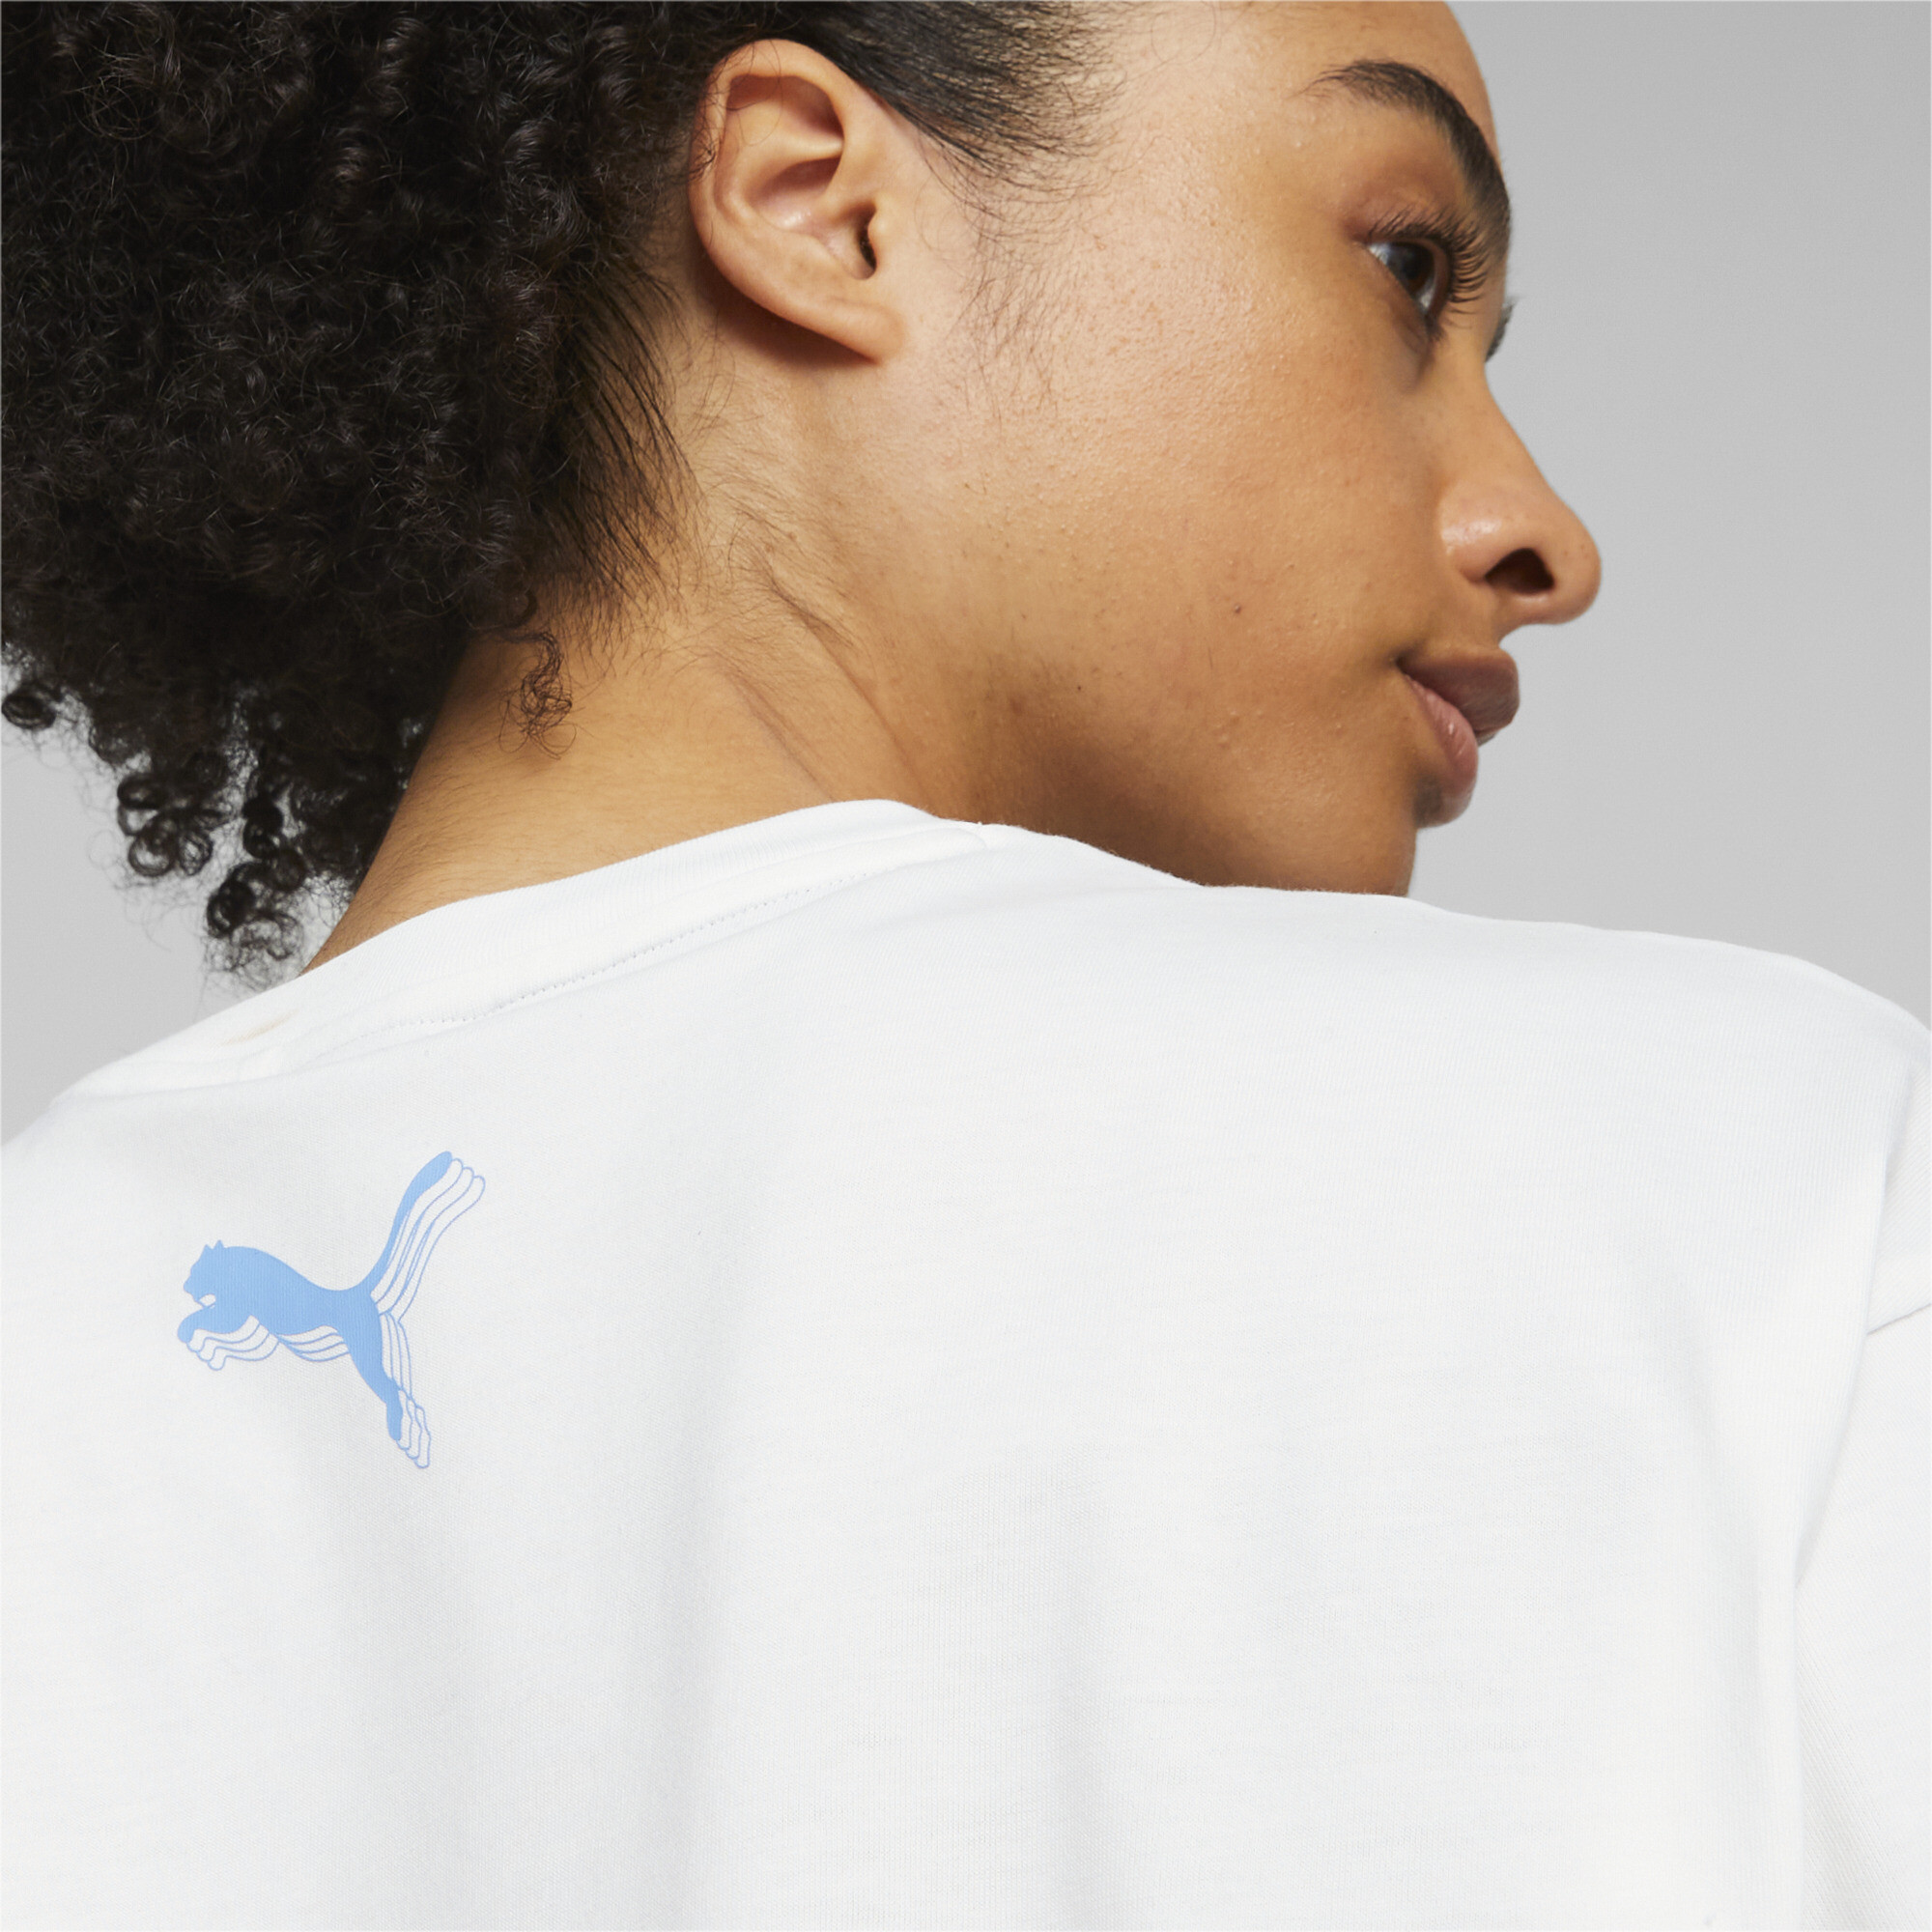 Women's Puma STEWIE X WATER's Basketball T-Shirt, White, Size XS, Clothing